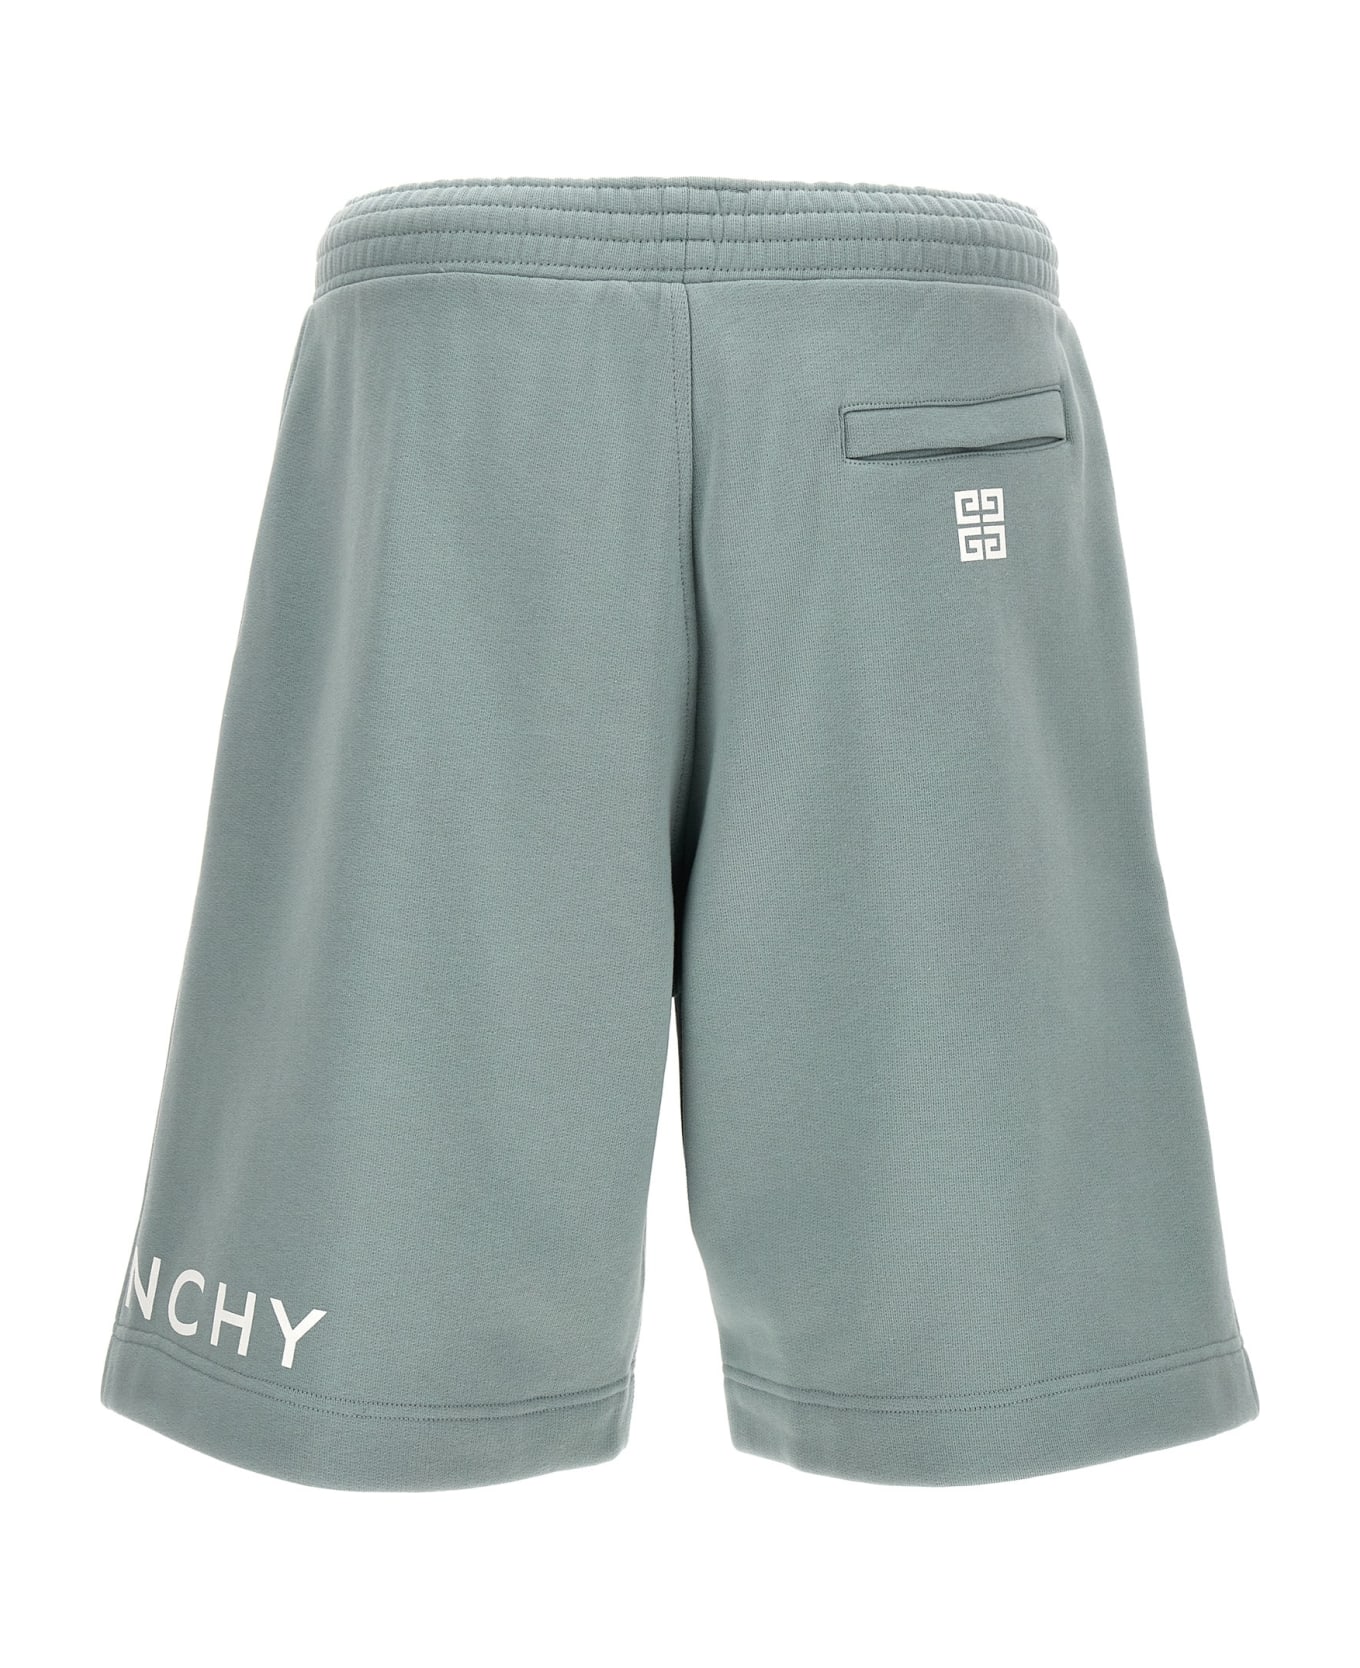 Givenchy Logo Print Bermuda Shorts - Light Blue